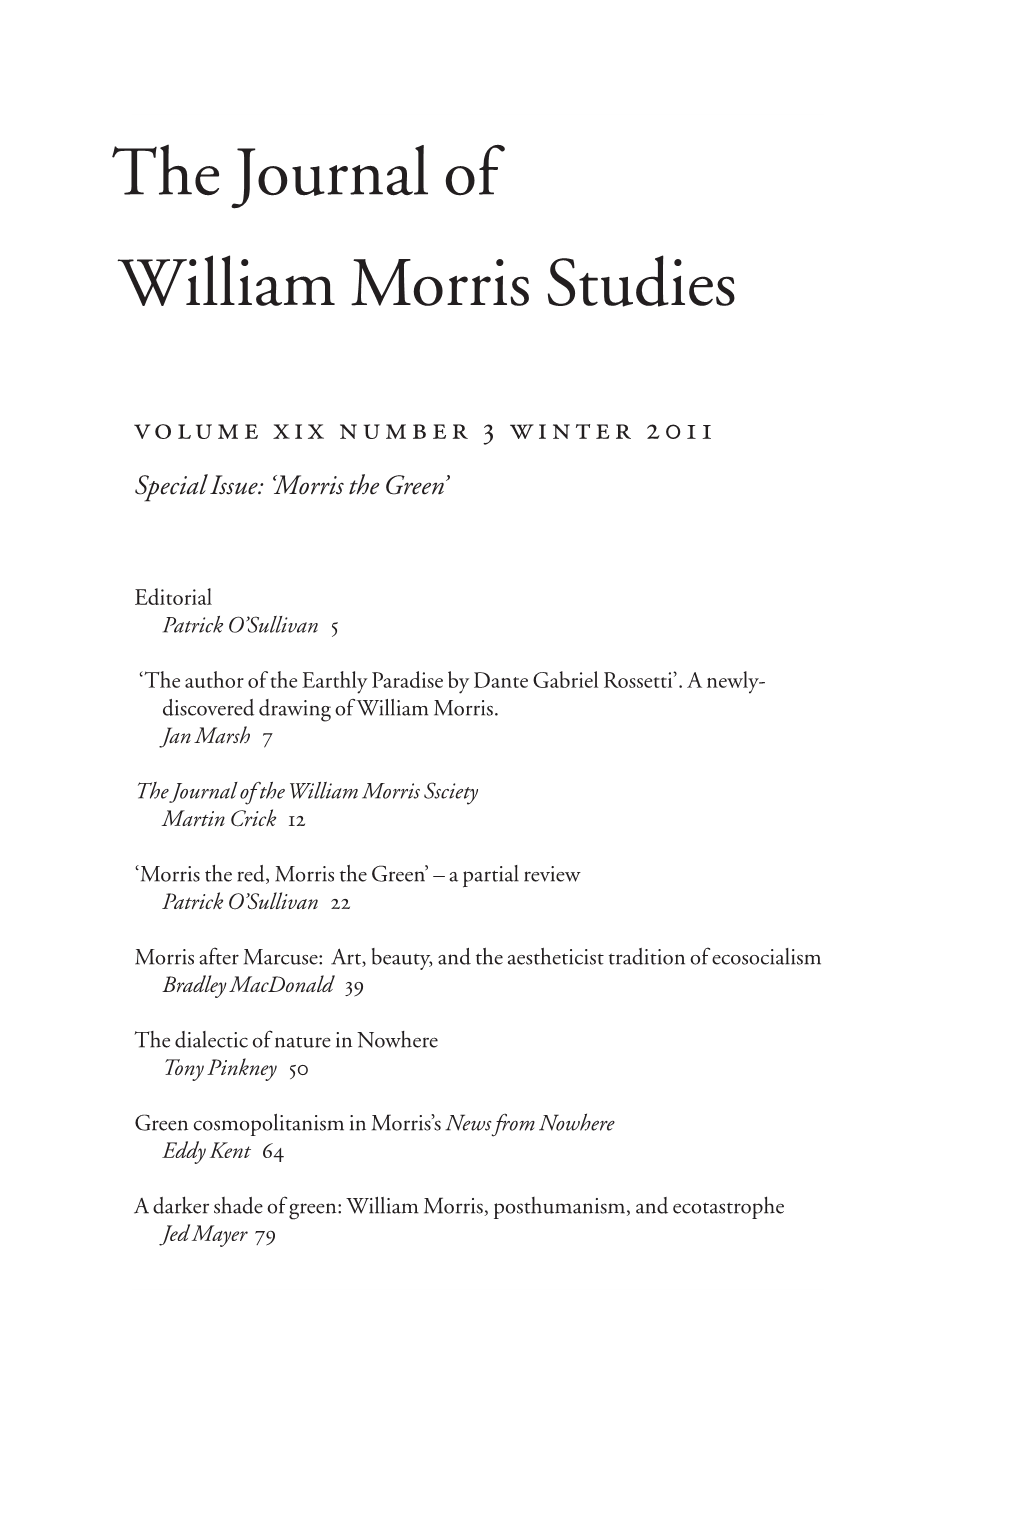 The Journal of William Morris Studies